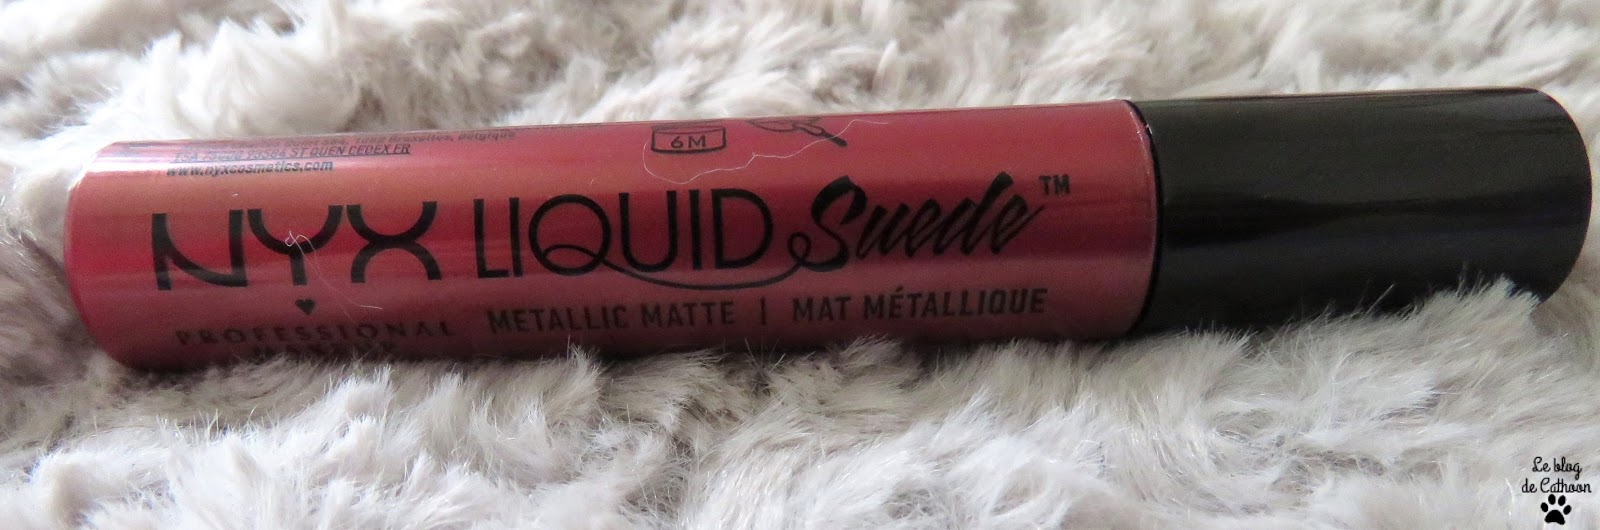 Liquid Suede Metallic Matte Suede - Pro Moderne / Modern Maven - NYX